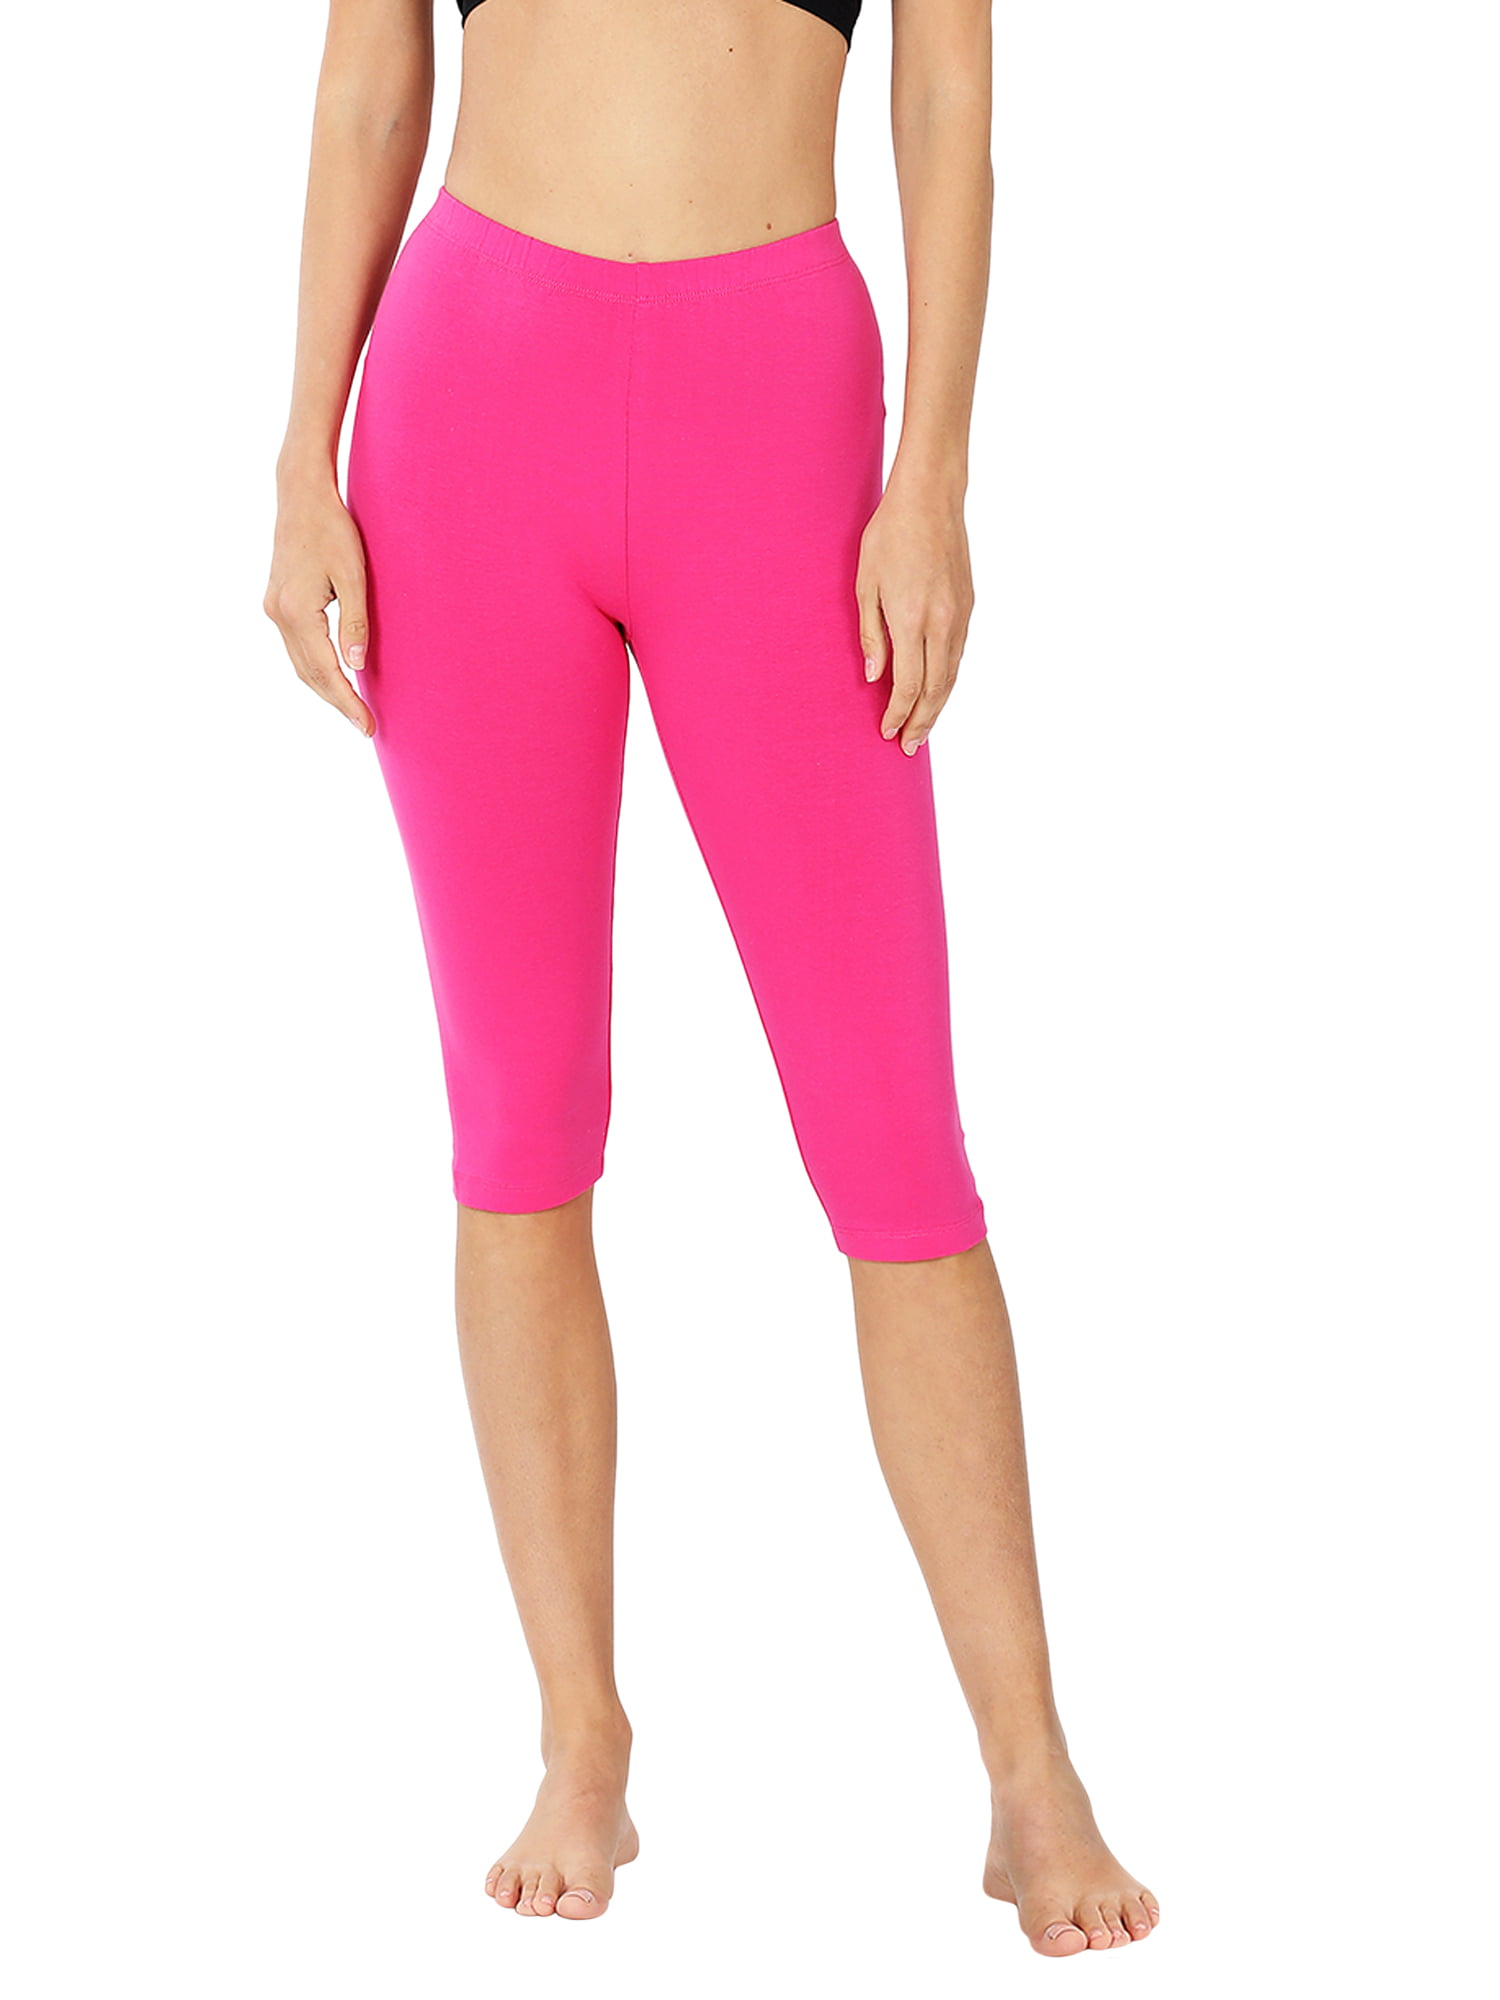 Women & Plus Essential Basic Cotton Spandex Stretch Below Knee Length 15  Leggings (Hot Pink, XL) 